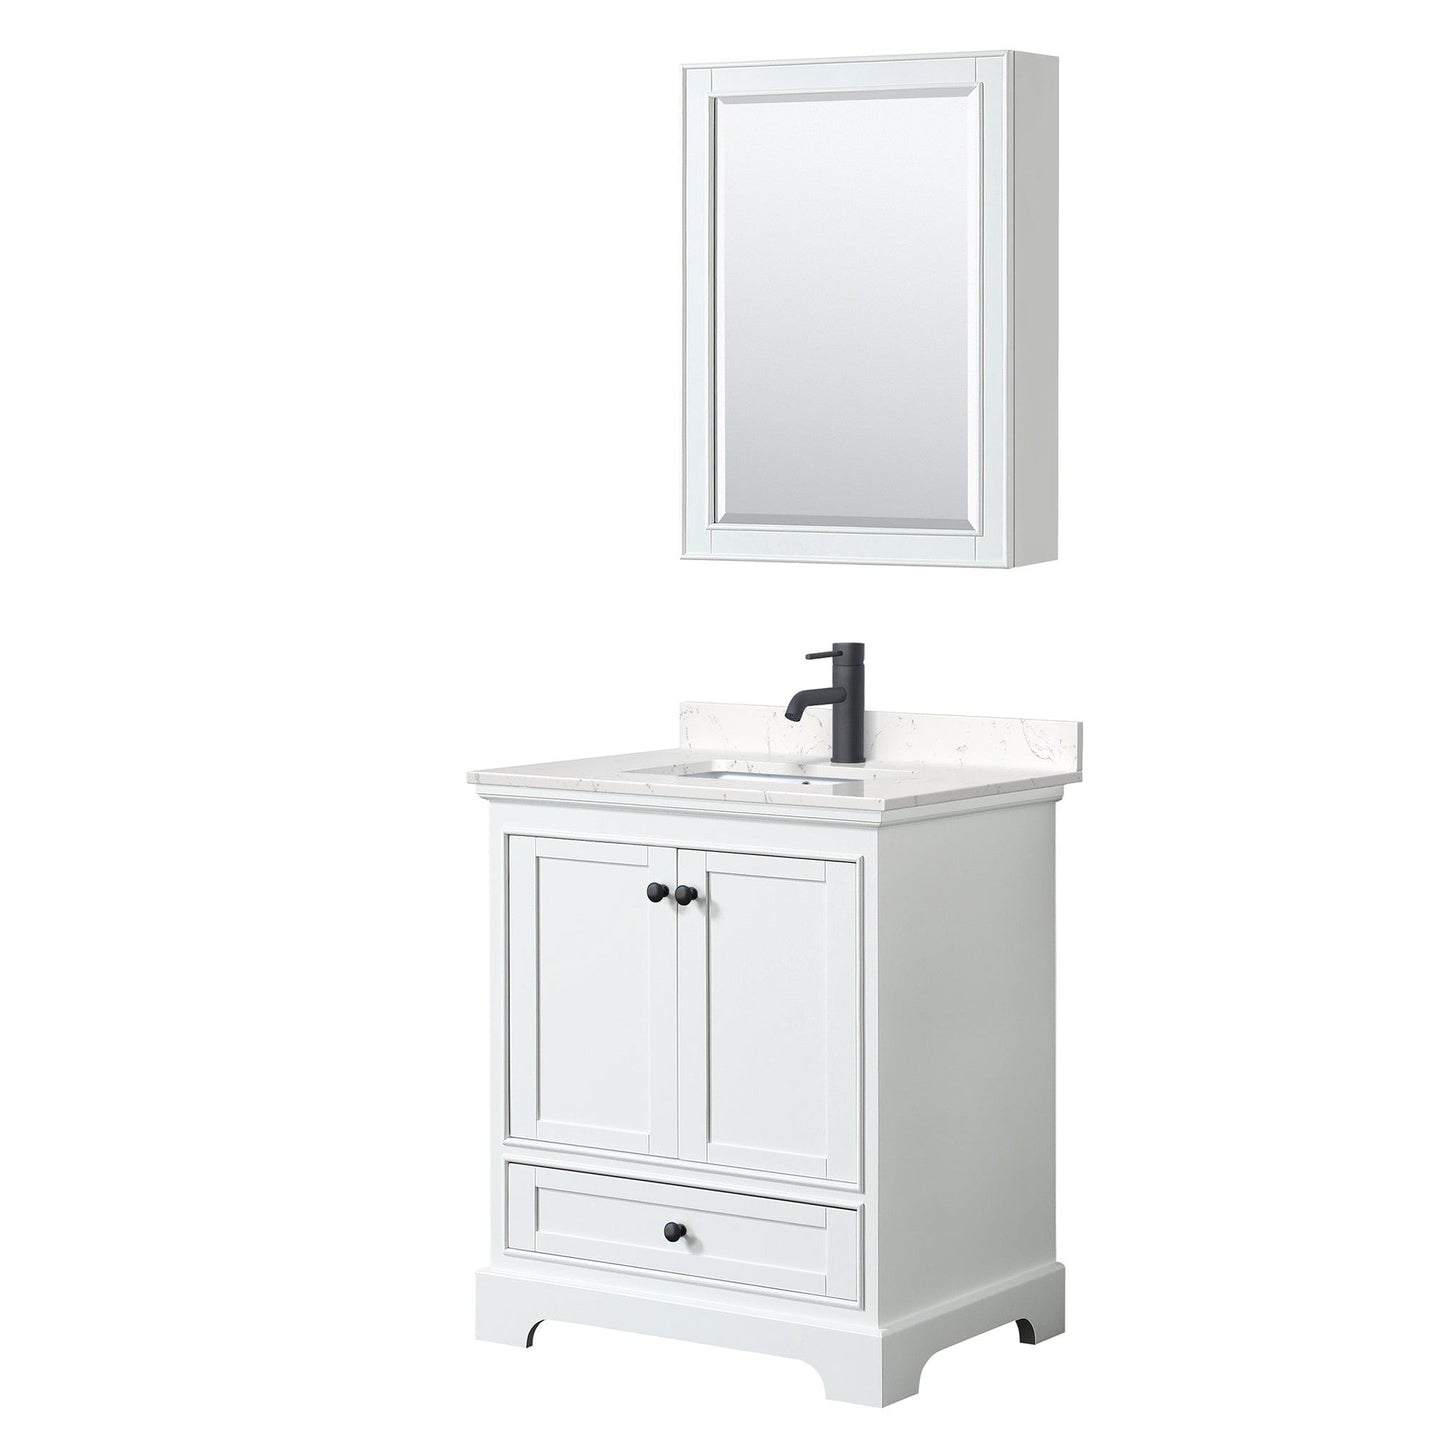 Deborah 30" Single Bathroom Vanity in White, Carrara Cultured Marble Countertop, Undermount Square Sink, Matte Black Trim, Medicine Cabinet